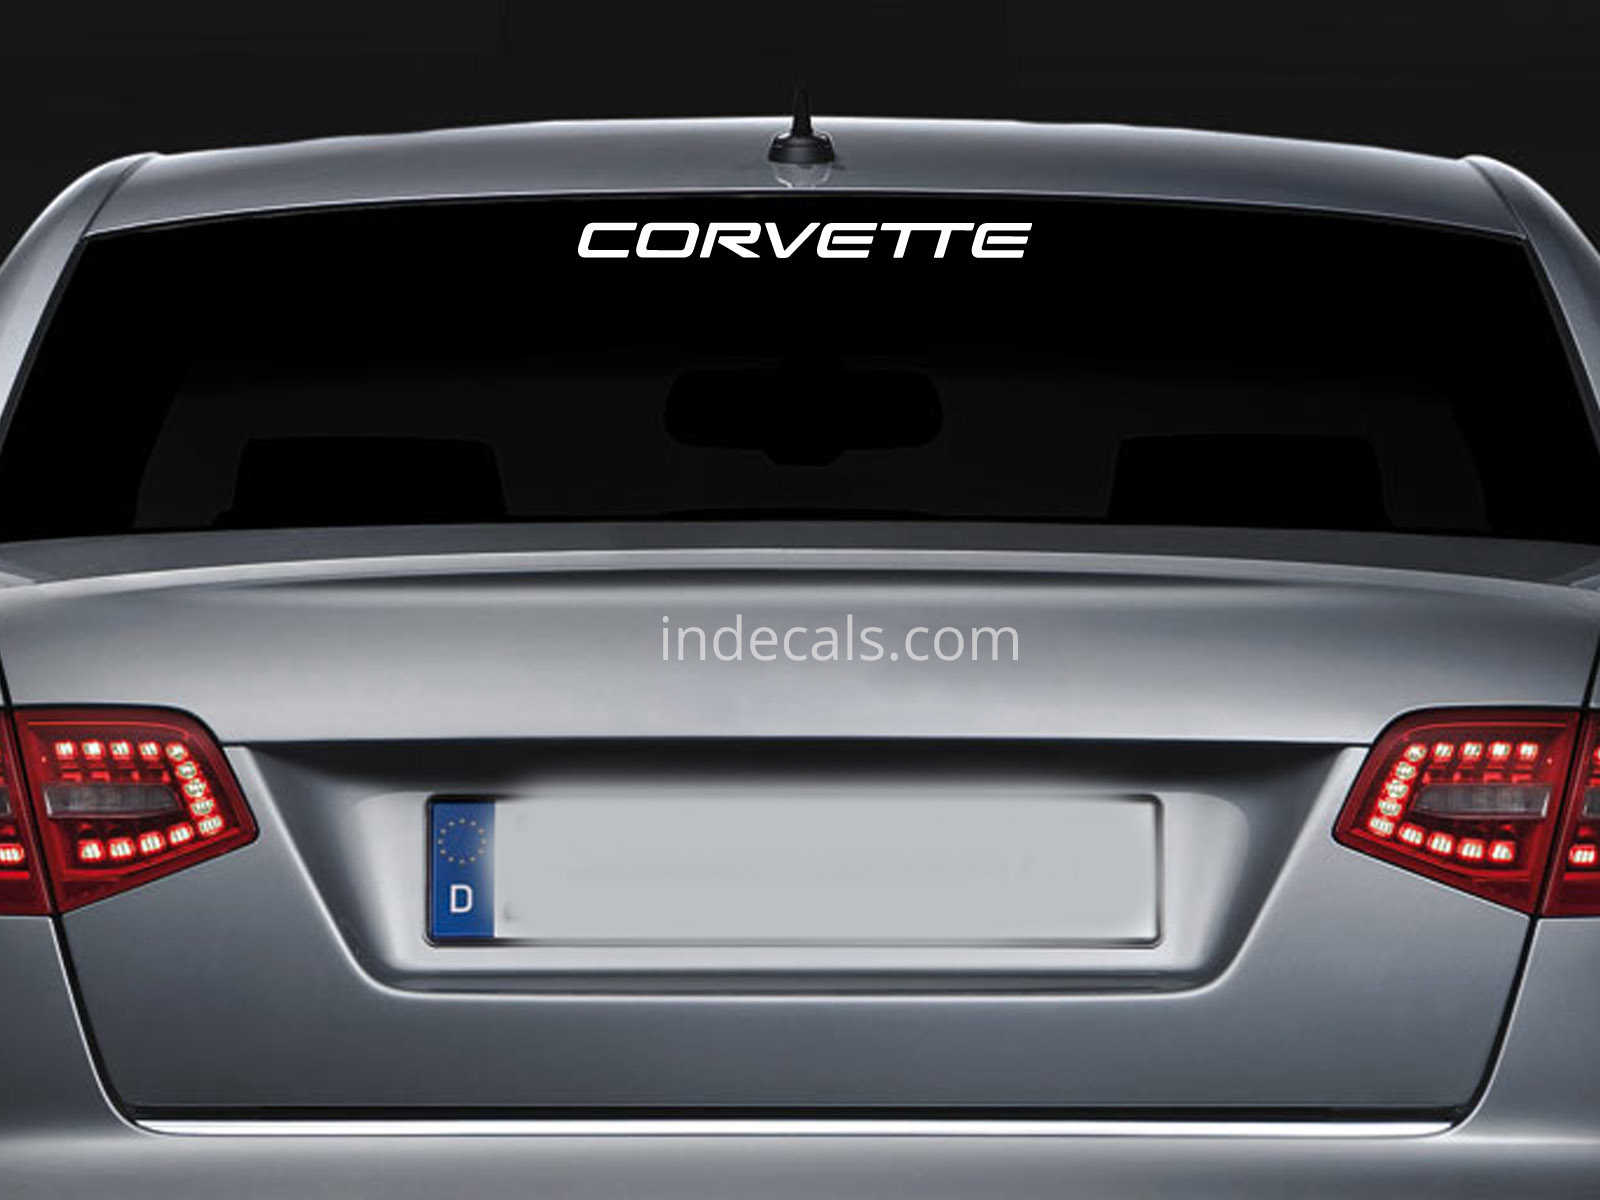 1 x Corvette Sticker for Windshield or Back Window - White